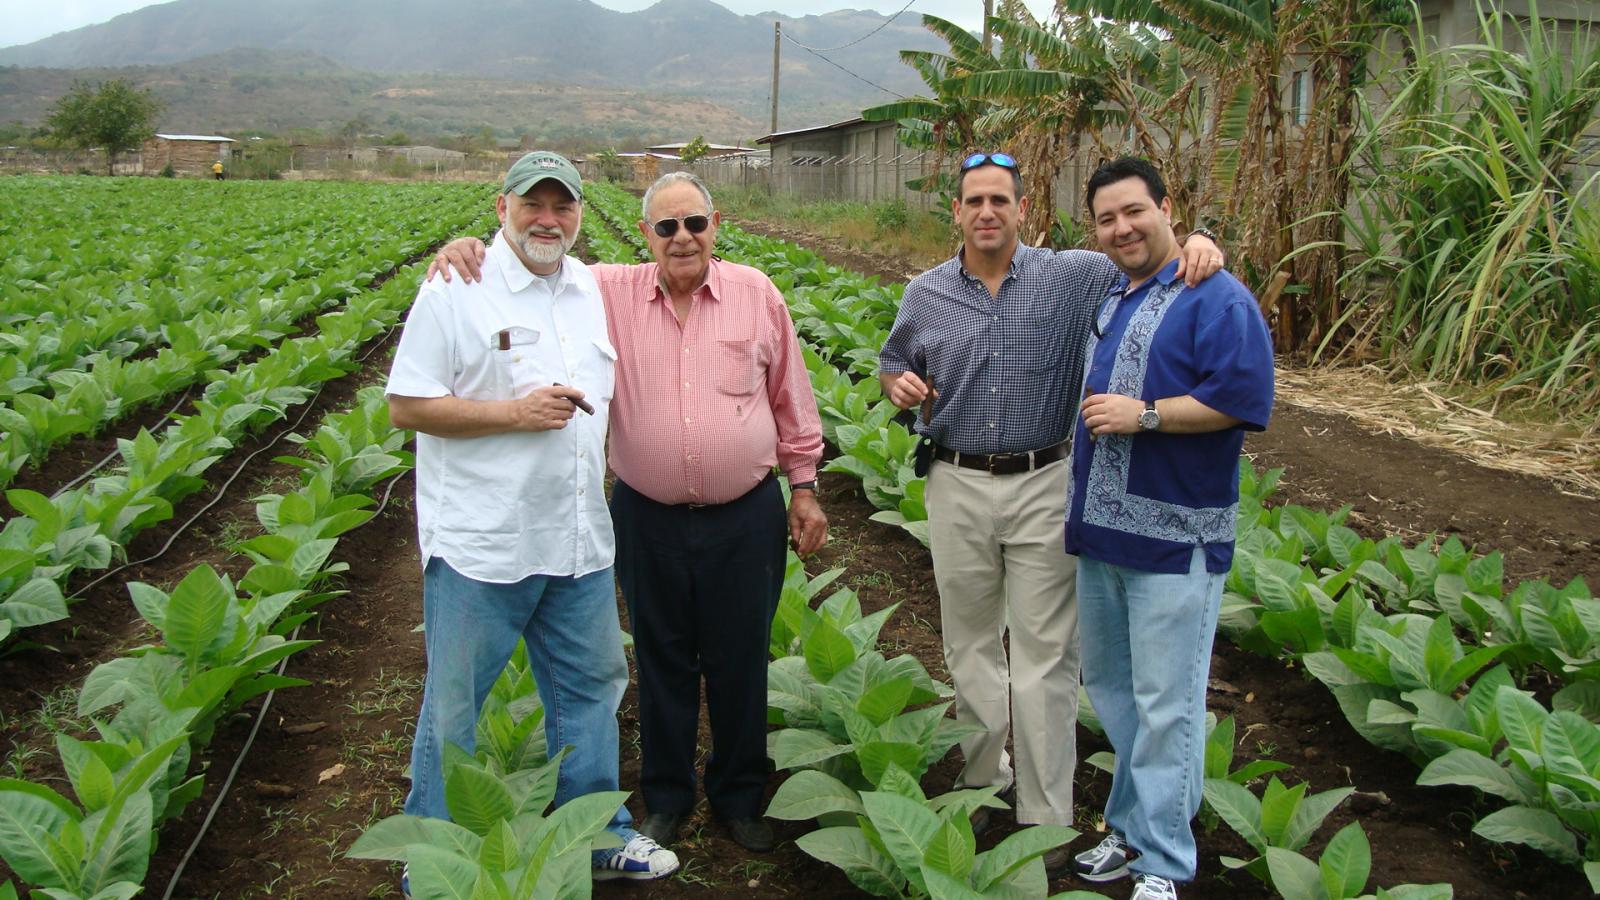 Roadie George, Don Orlando, Jorge Padron, and myself